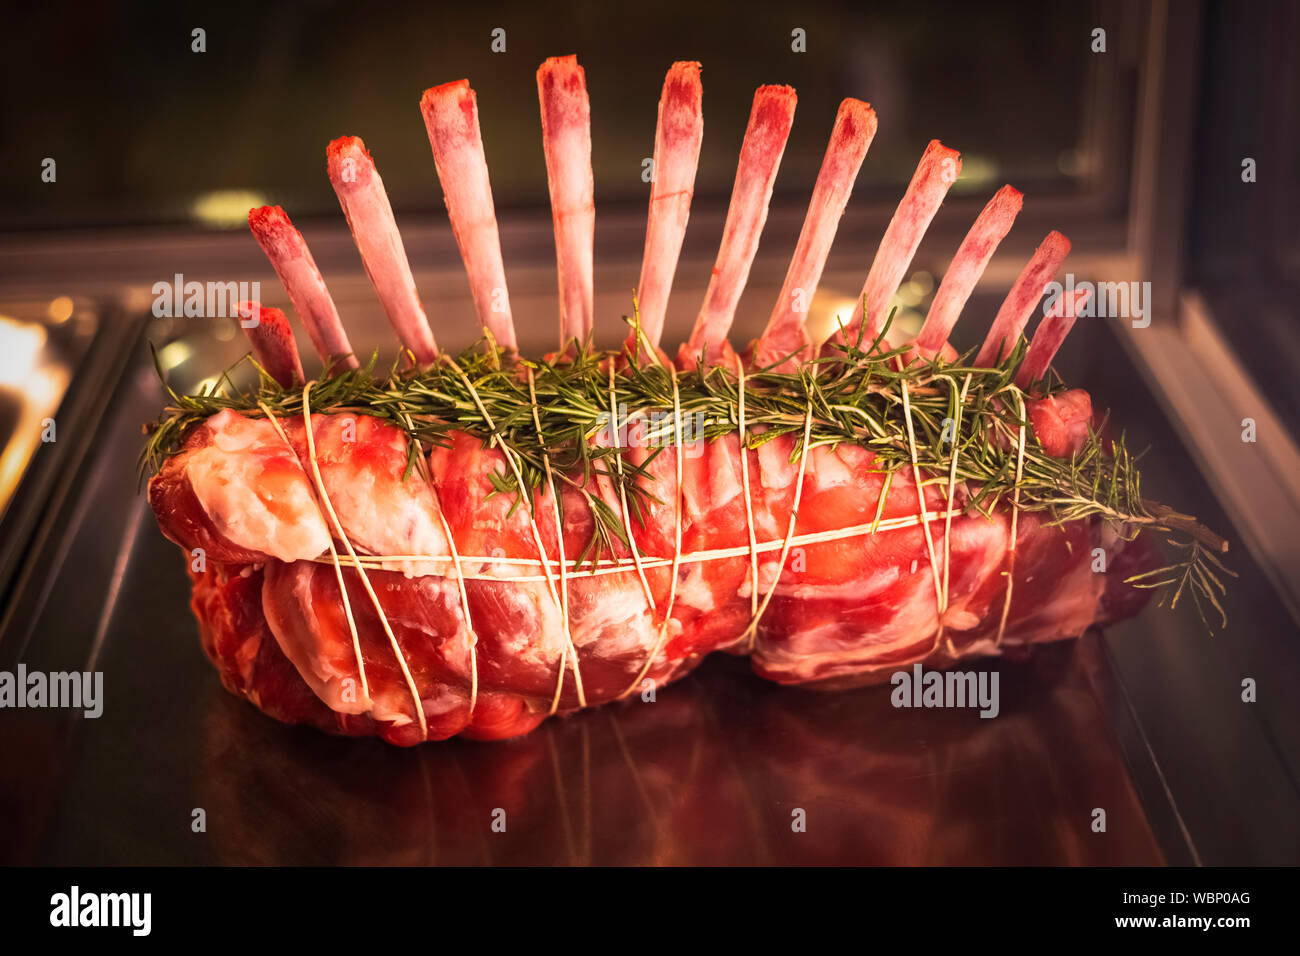 Raw fresh uncooked Pork Meat steak on bone, Raw pork Meat steak on steel tray Stock Photo